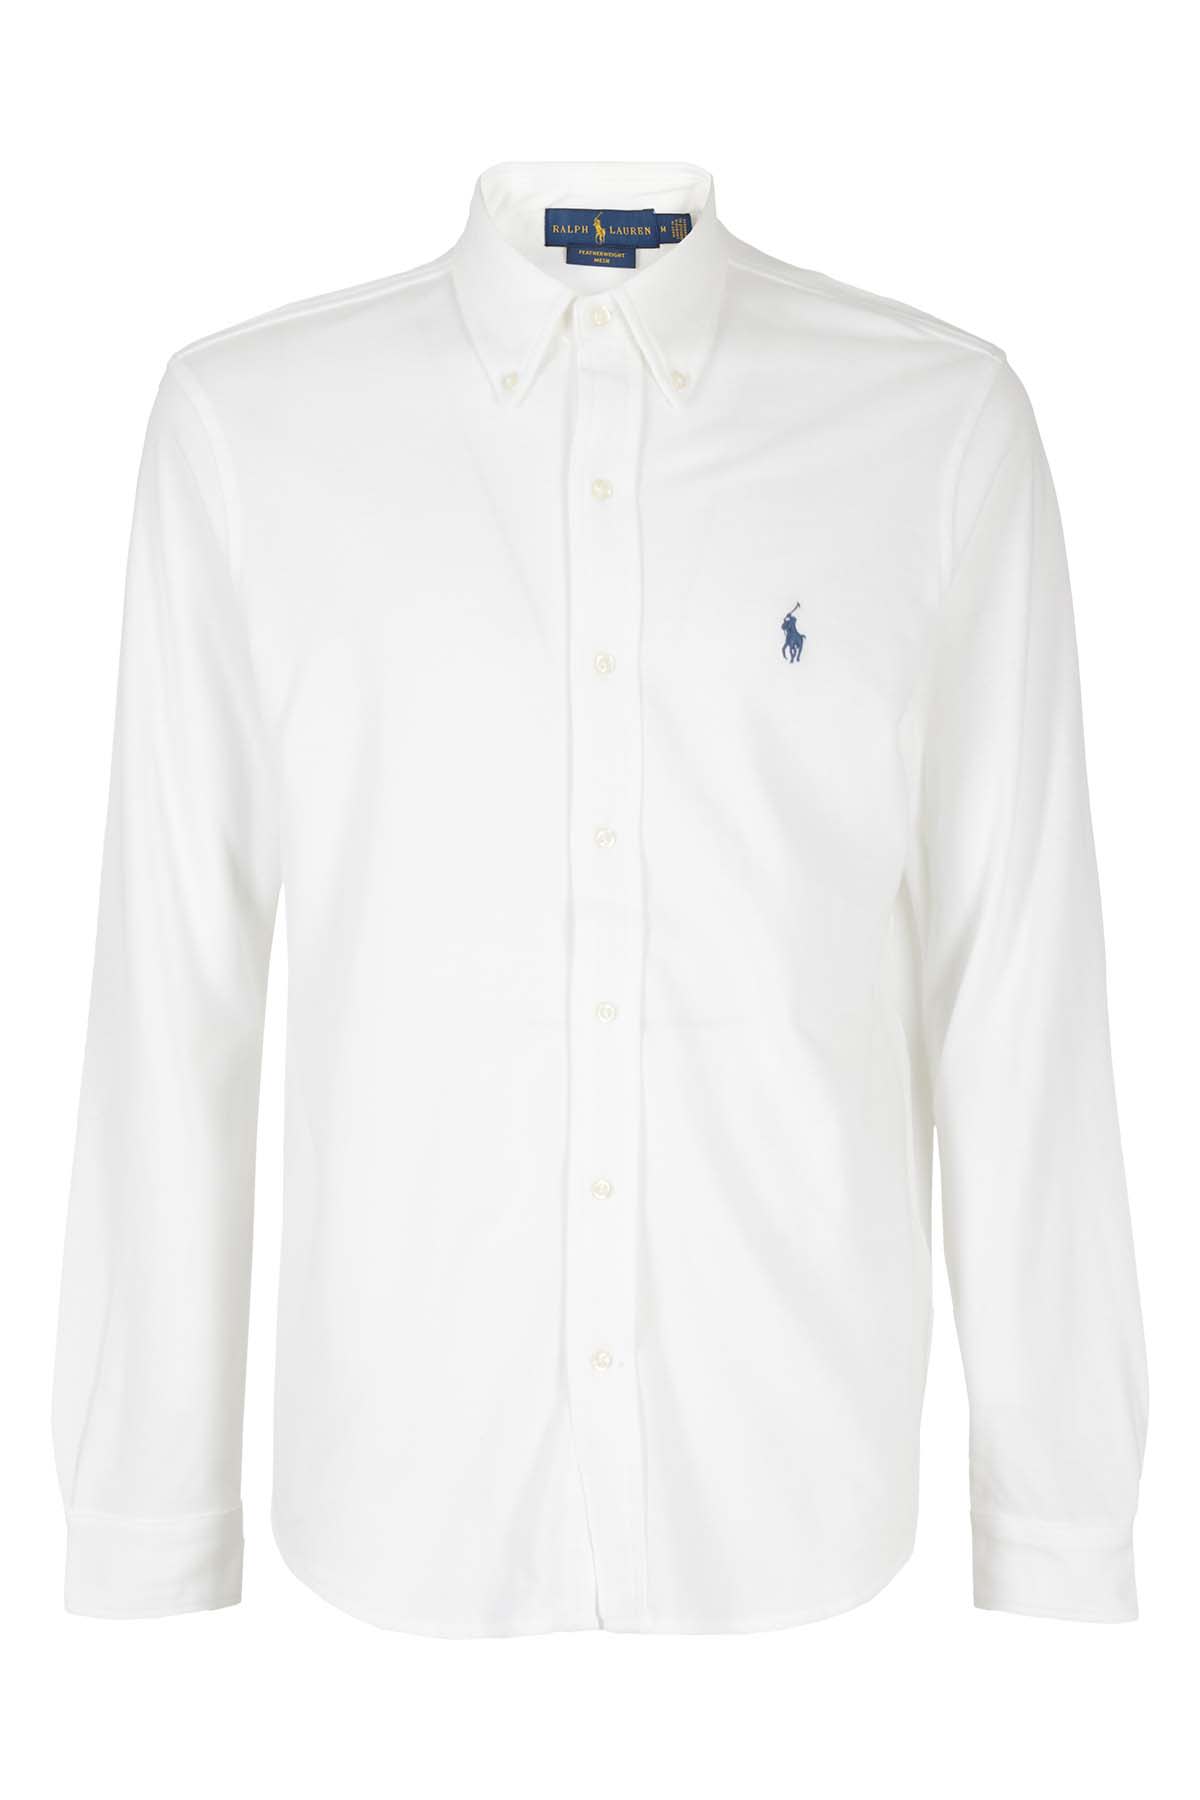 Shop Polo Ralph Lauren Long Sleeve Knit In White